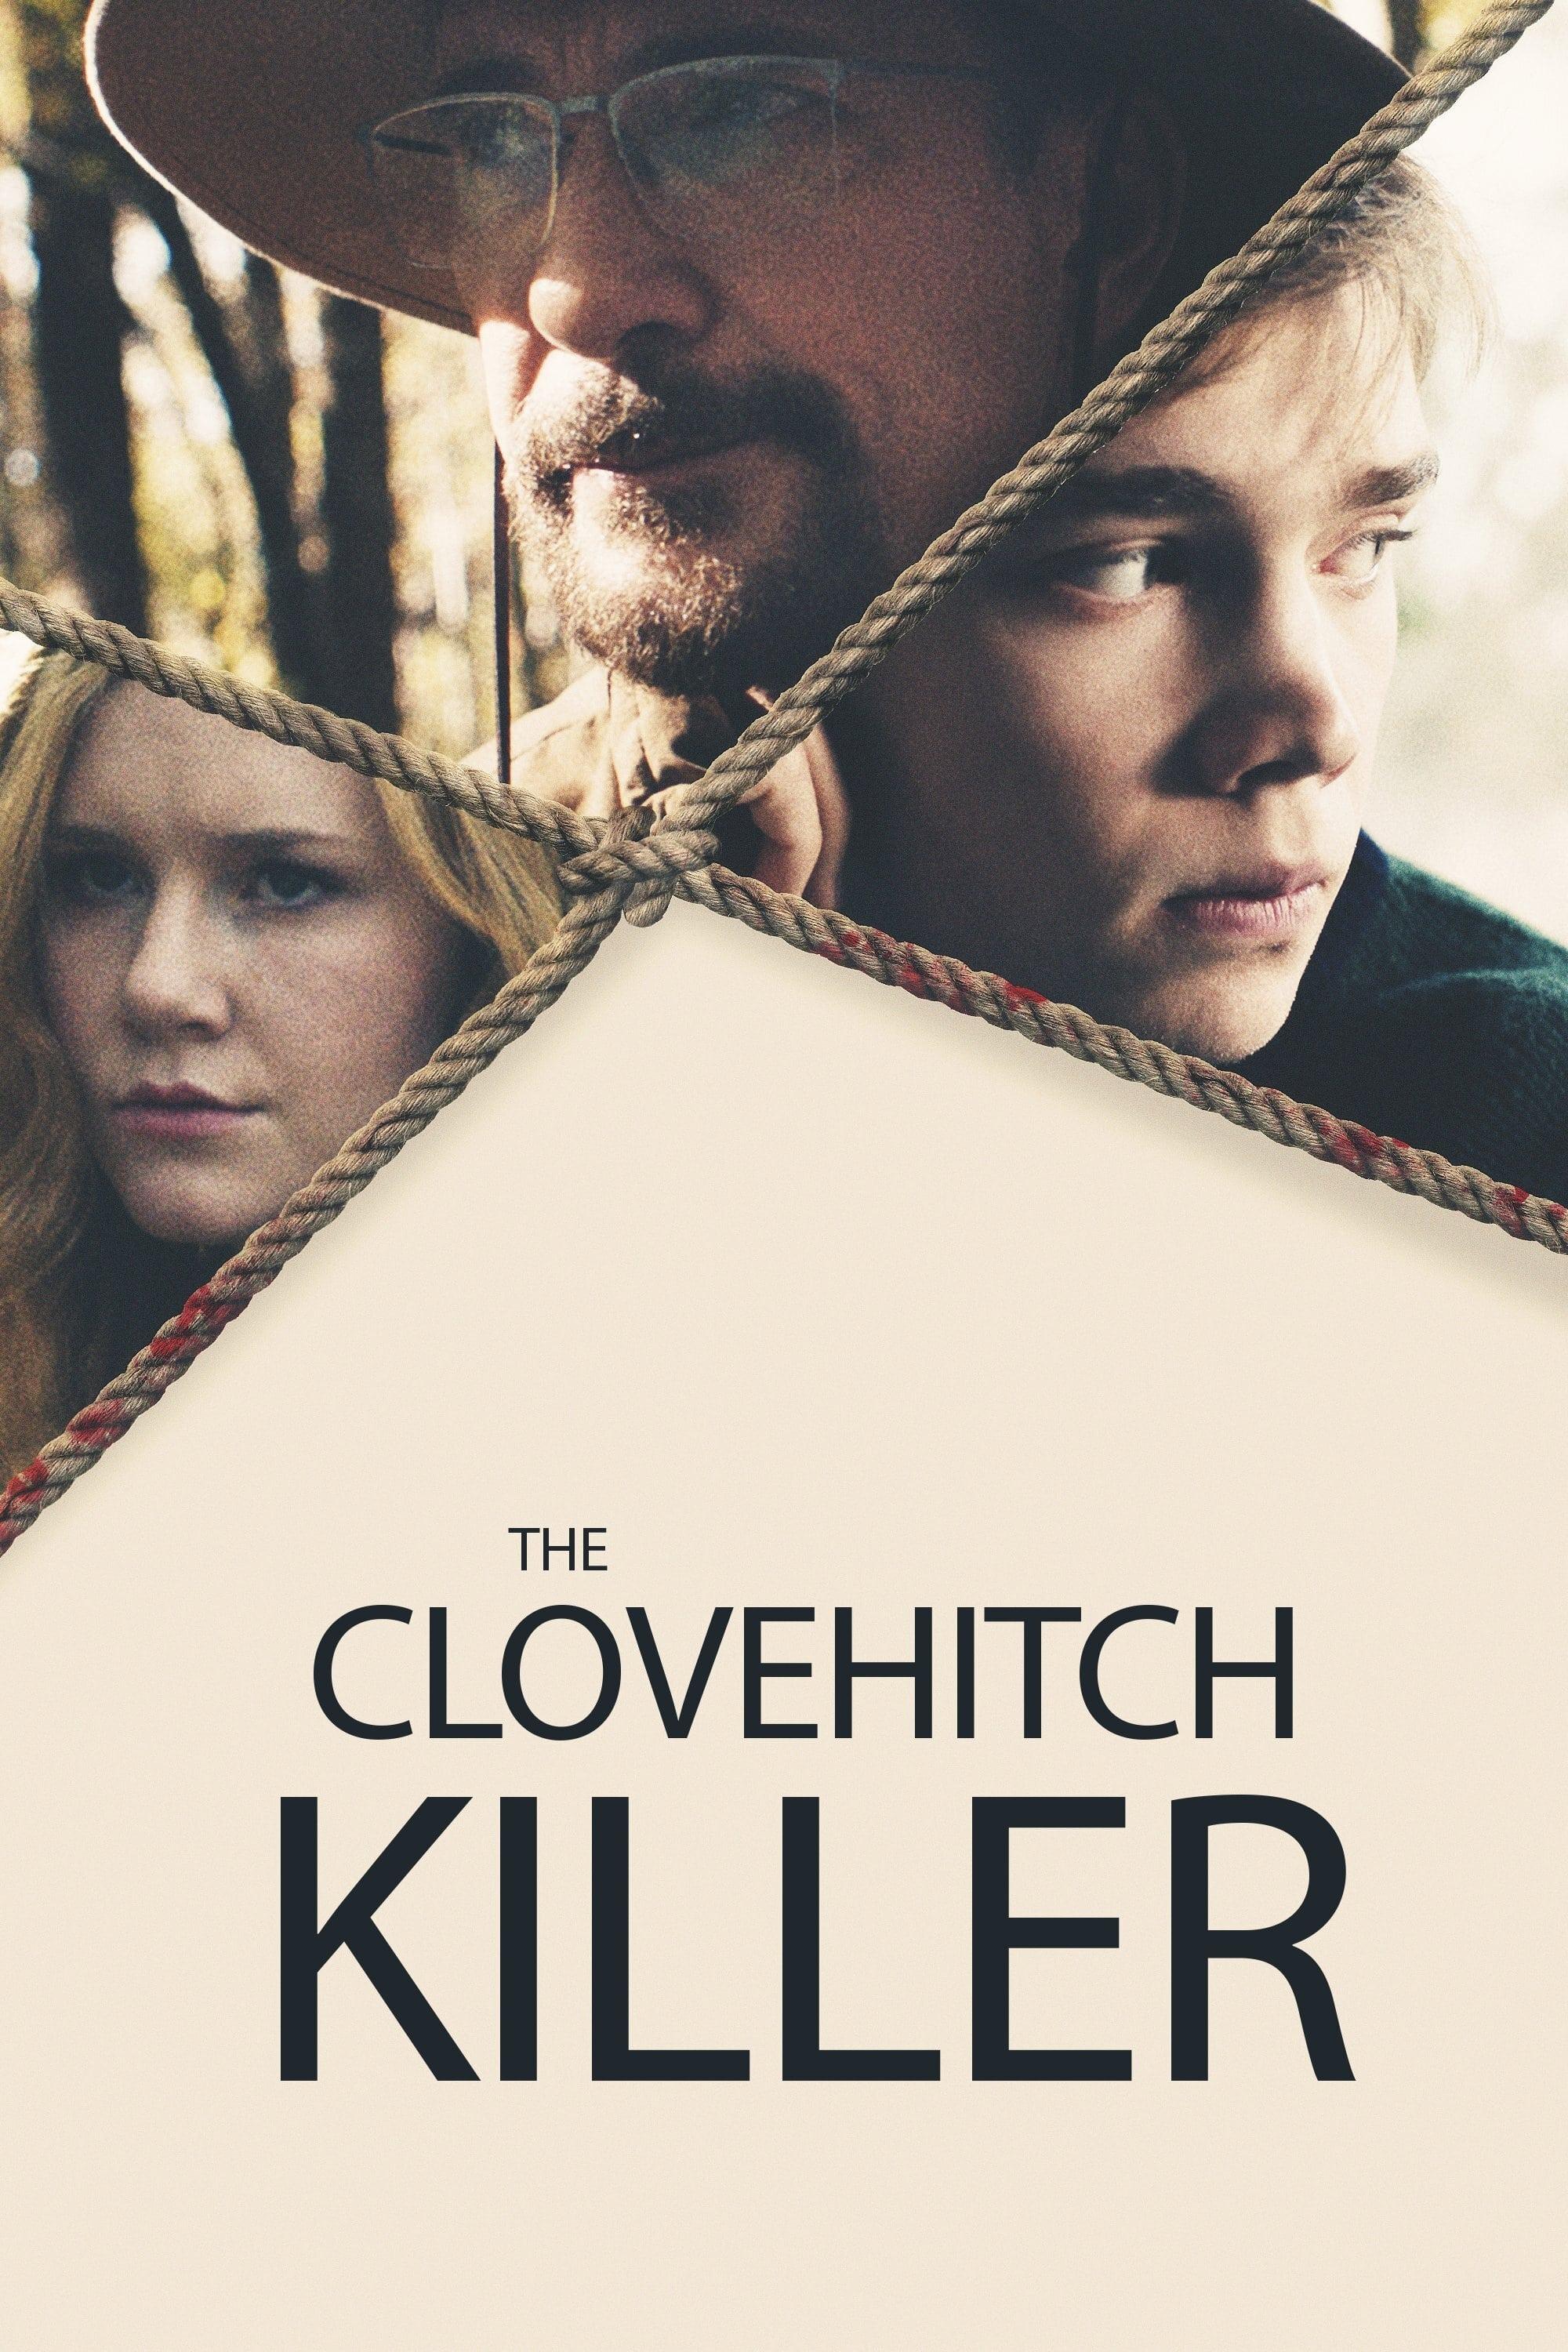 The Clovehitch Killer poster